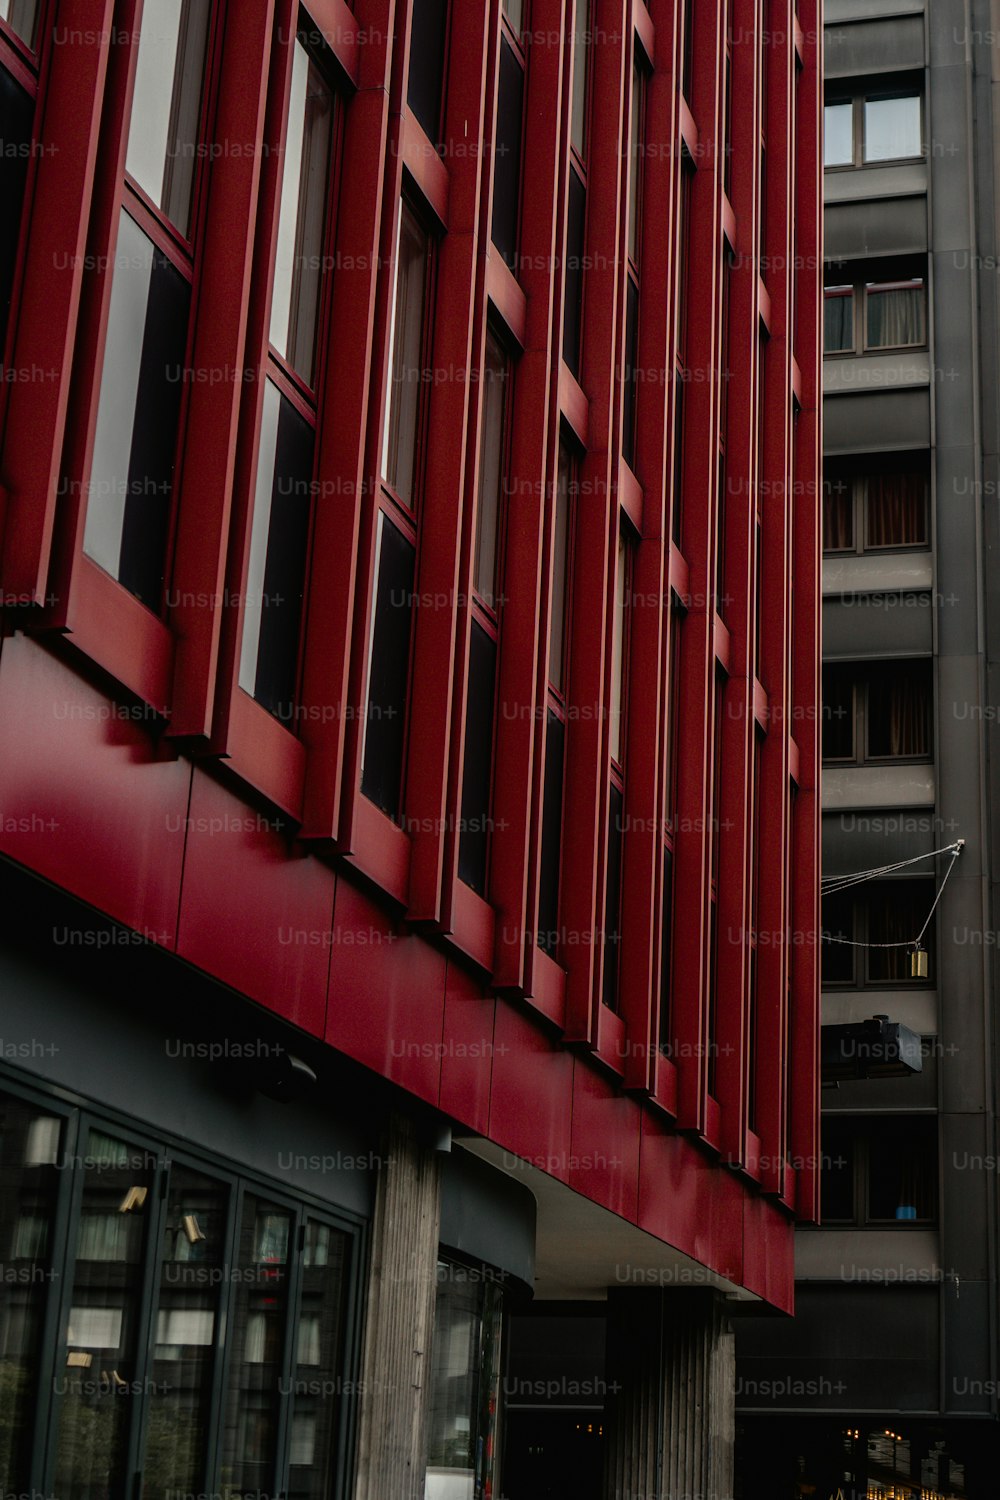 Un alto edificio rosso accanto a un alto edificio grigio